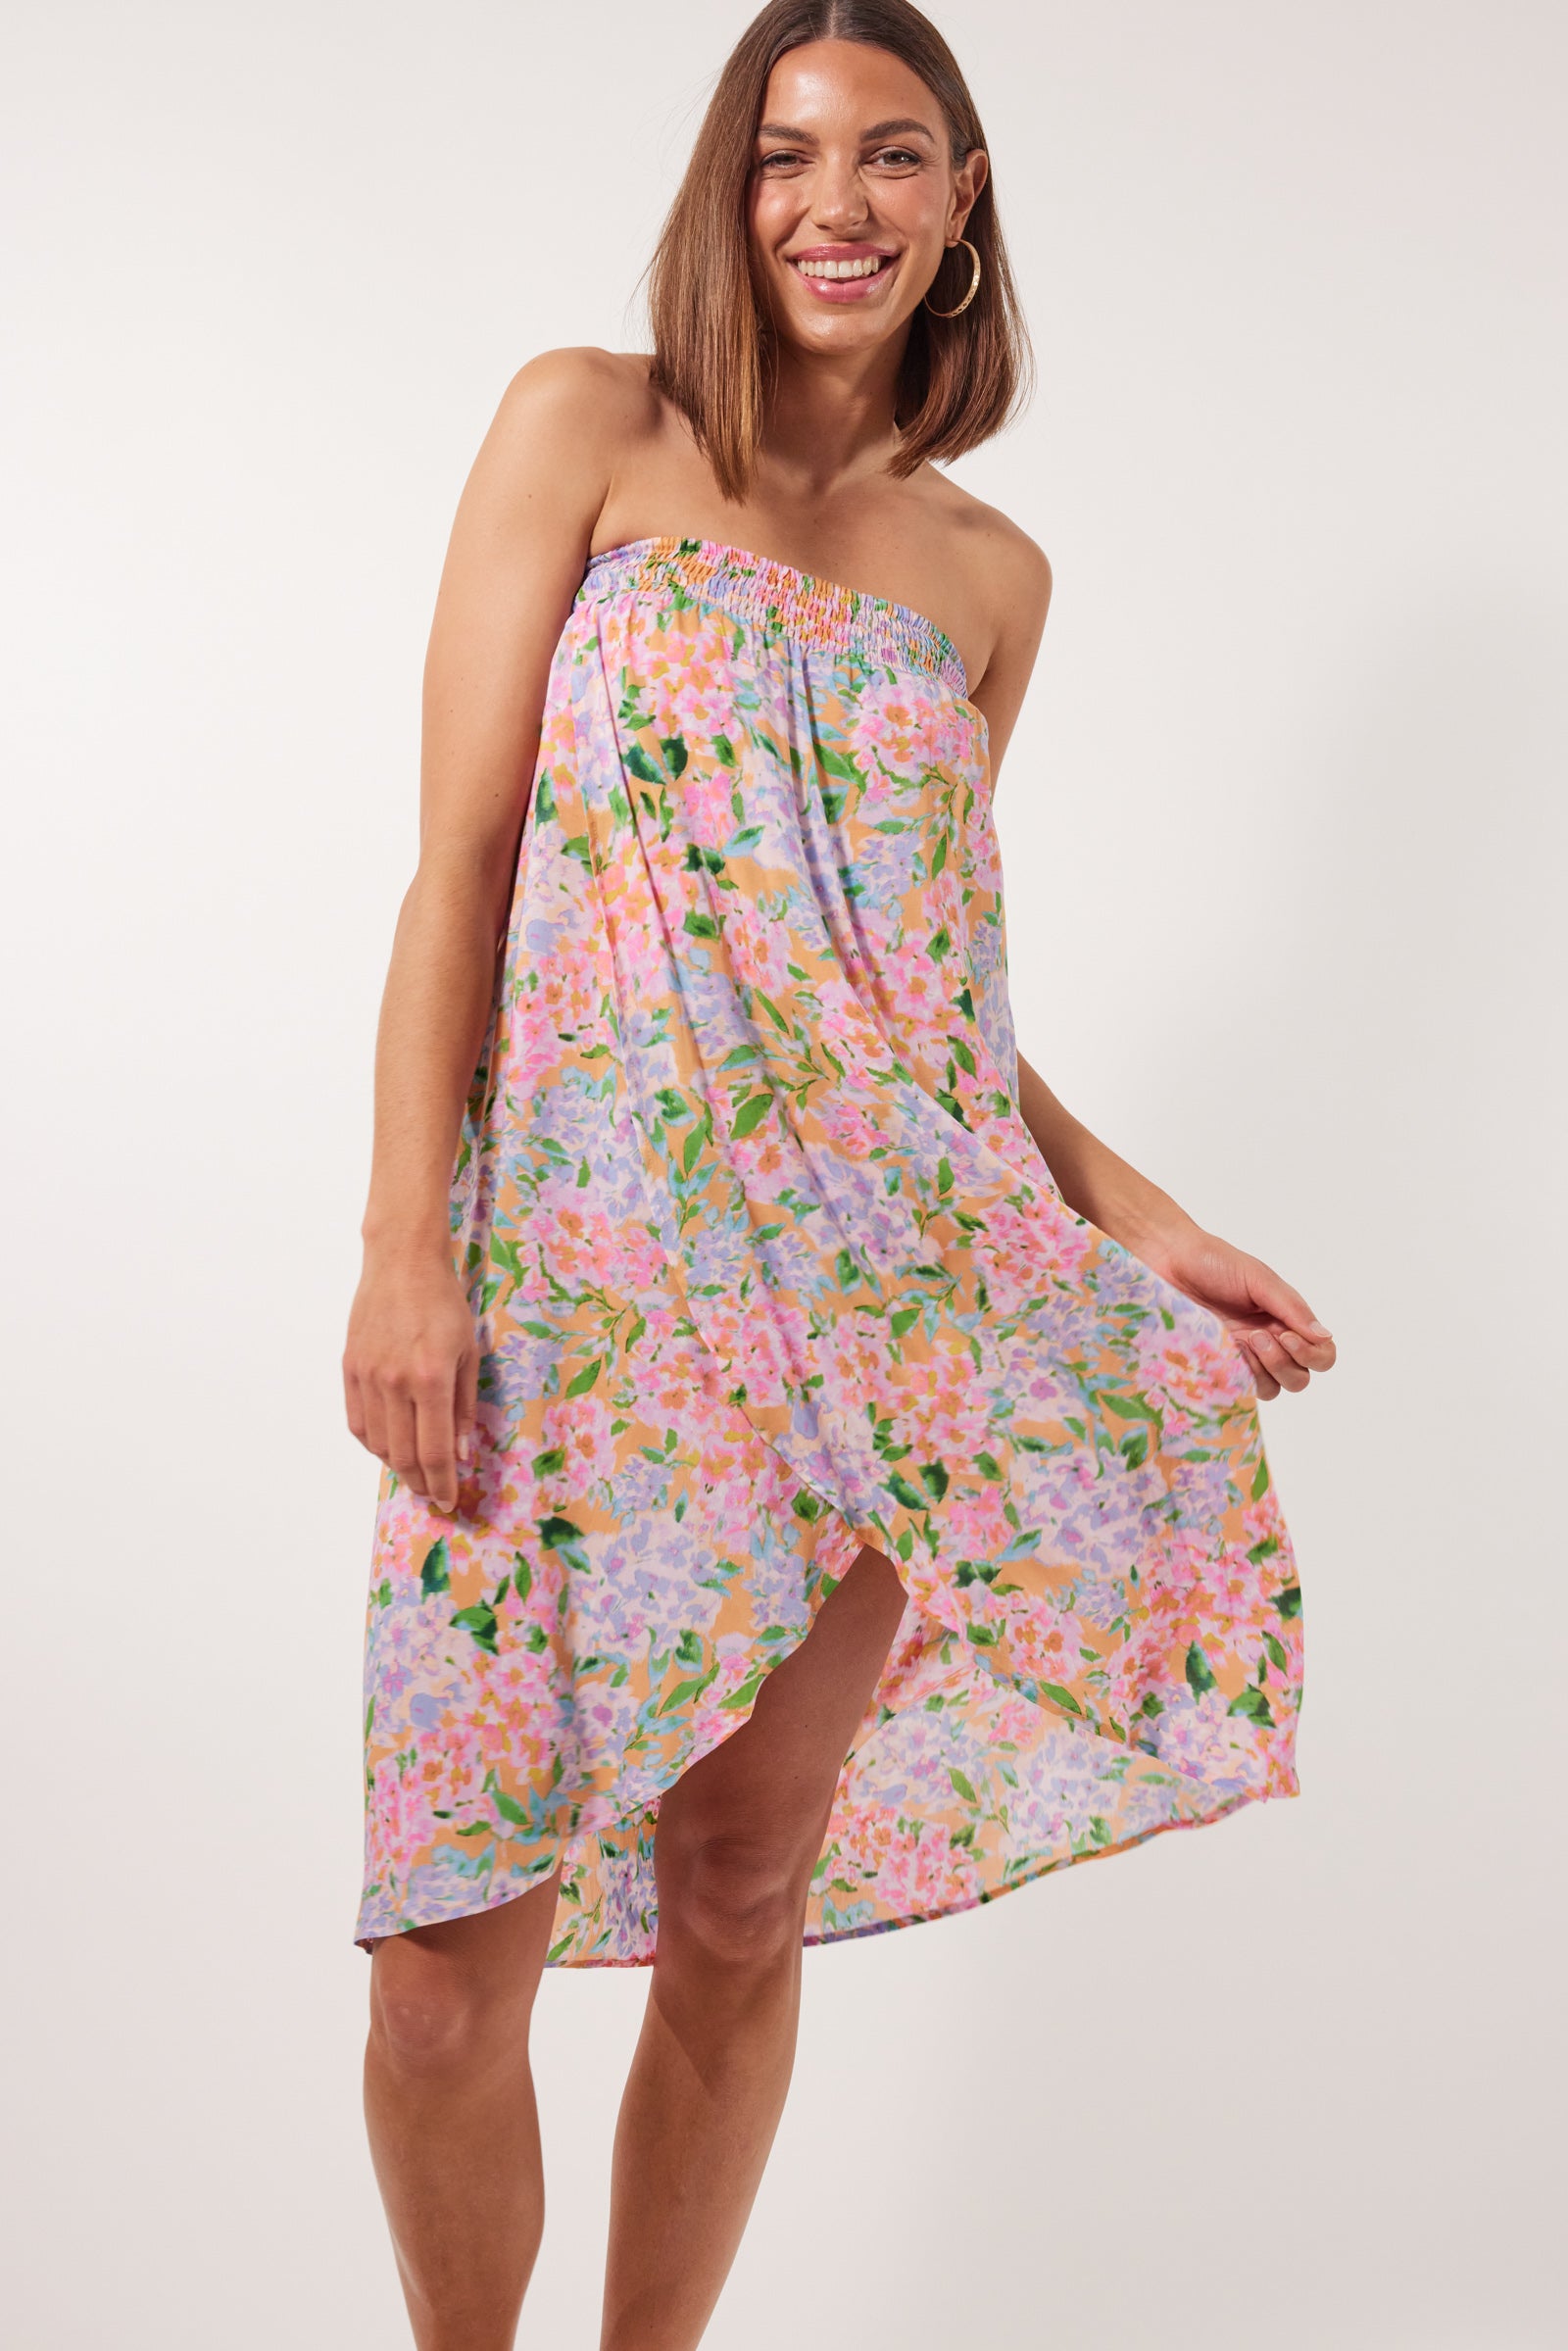 Botanical Midi Skirt - Sunset Hydrangea - Isle of Mine Clothing - Skirt Mid